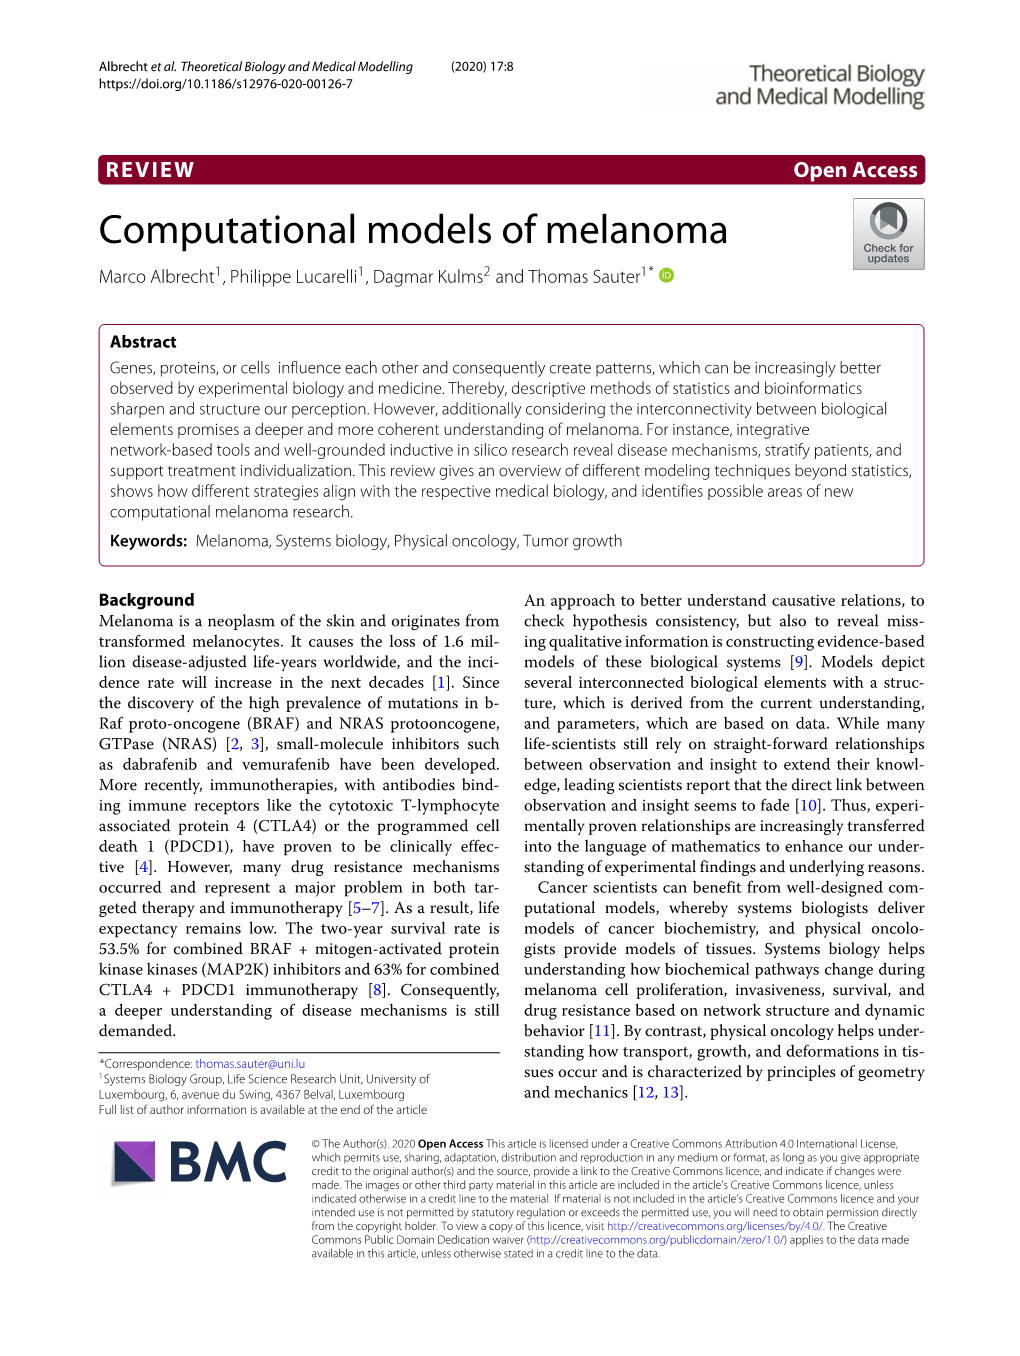 Computational Models of Melanoma Marco Albrecht1, Philippe Lucarelli1, Dagmar Kulms2 Andthomassauter1*